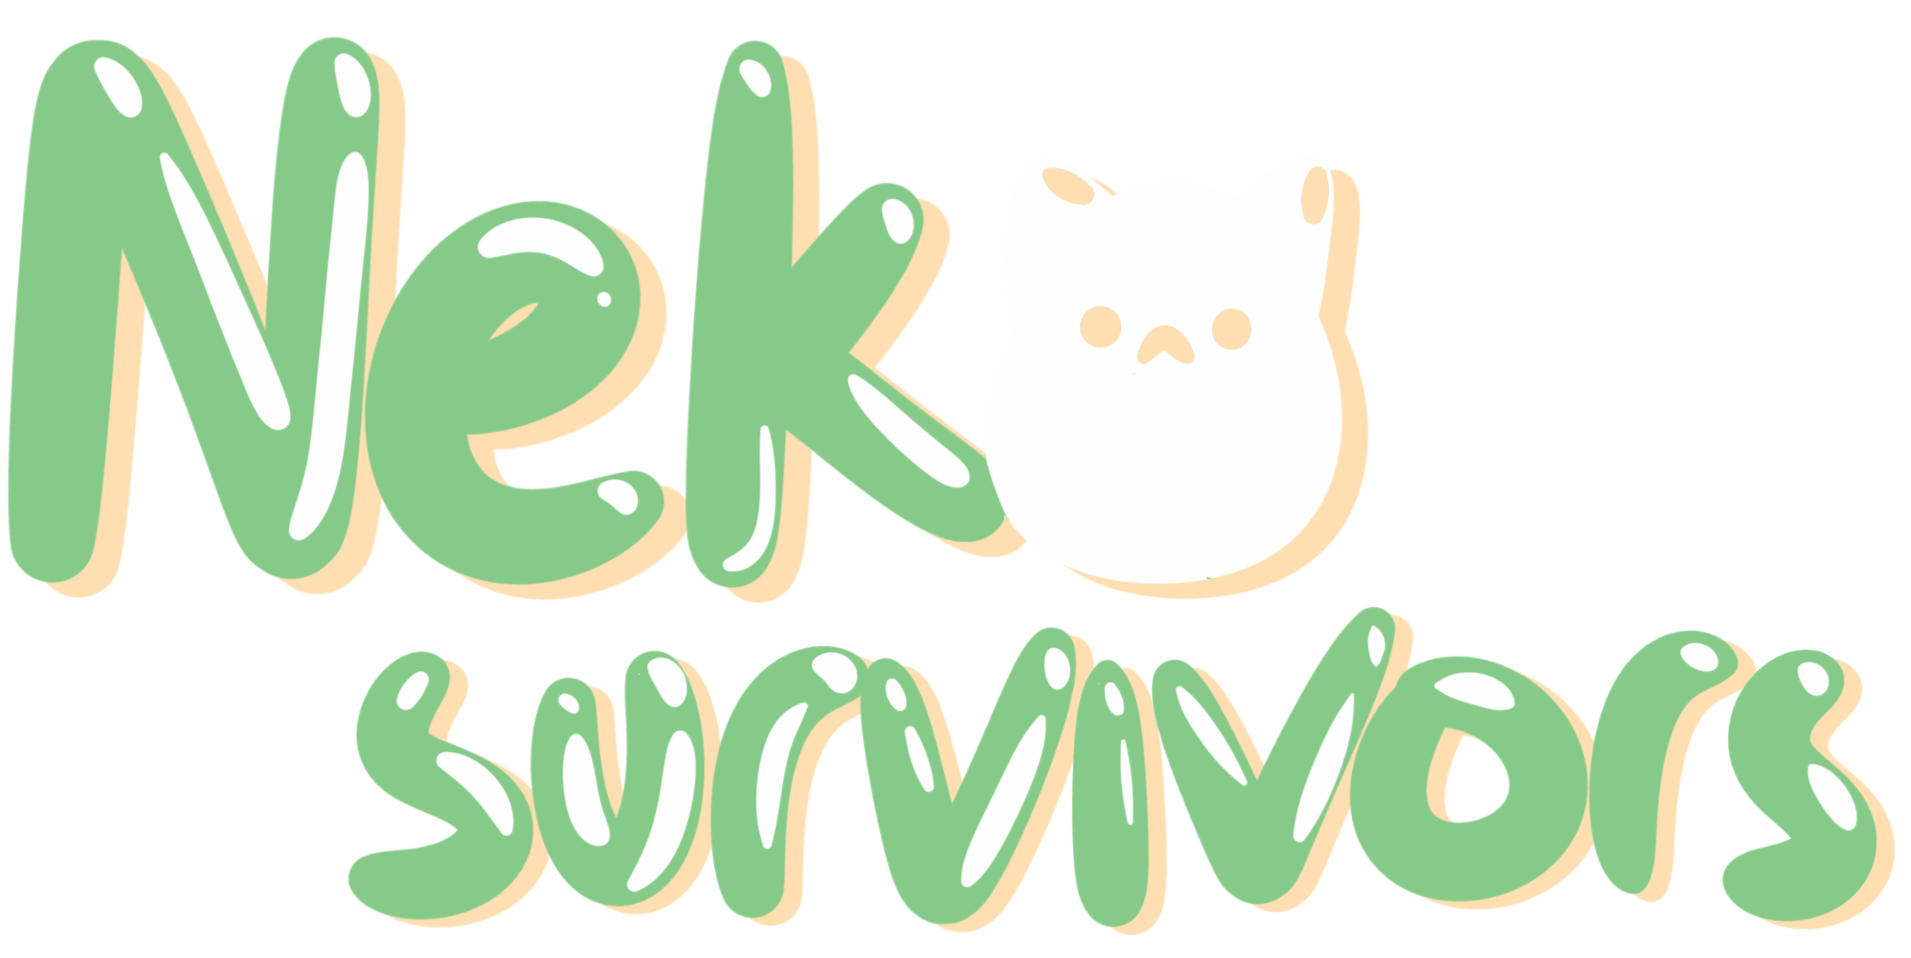 Neko Survivors